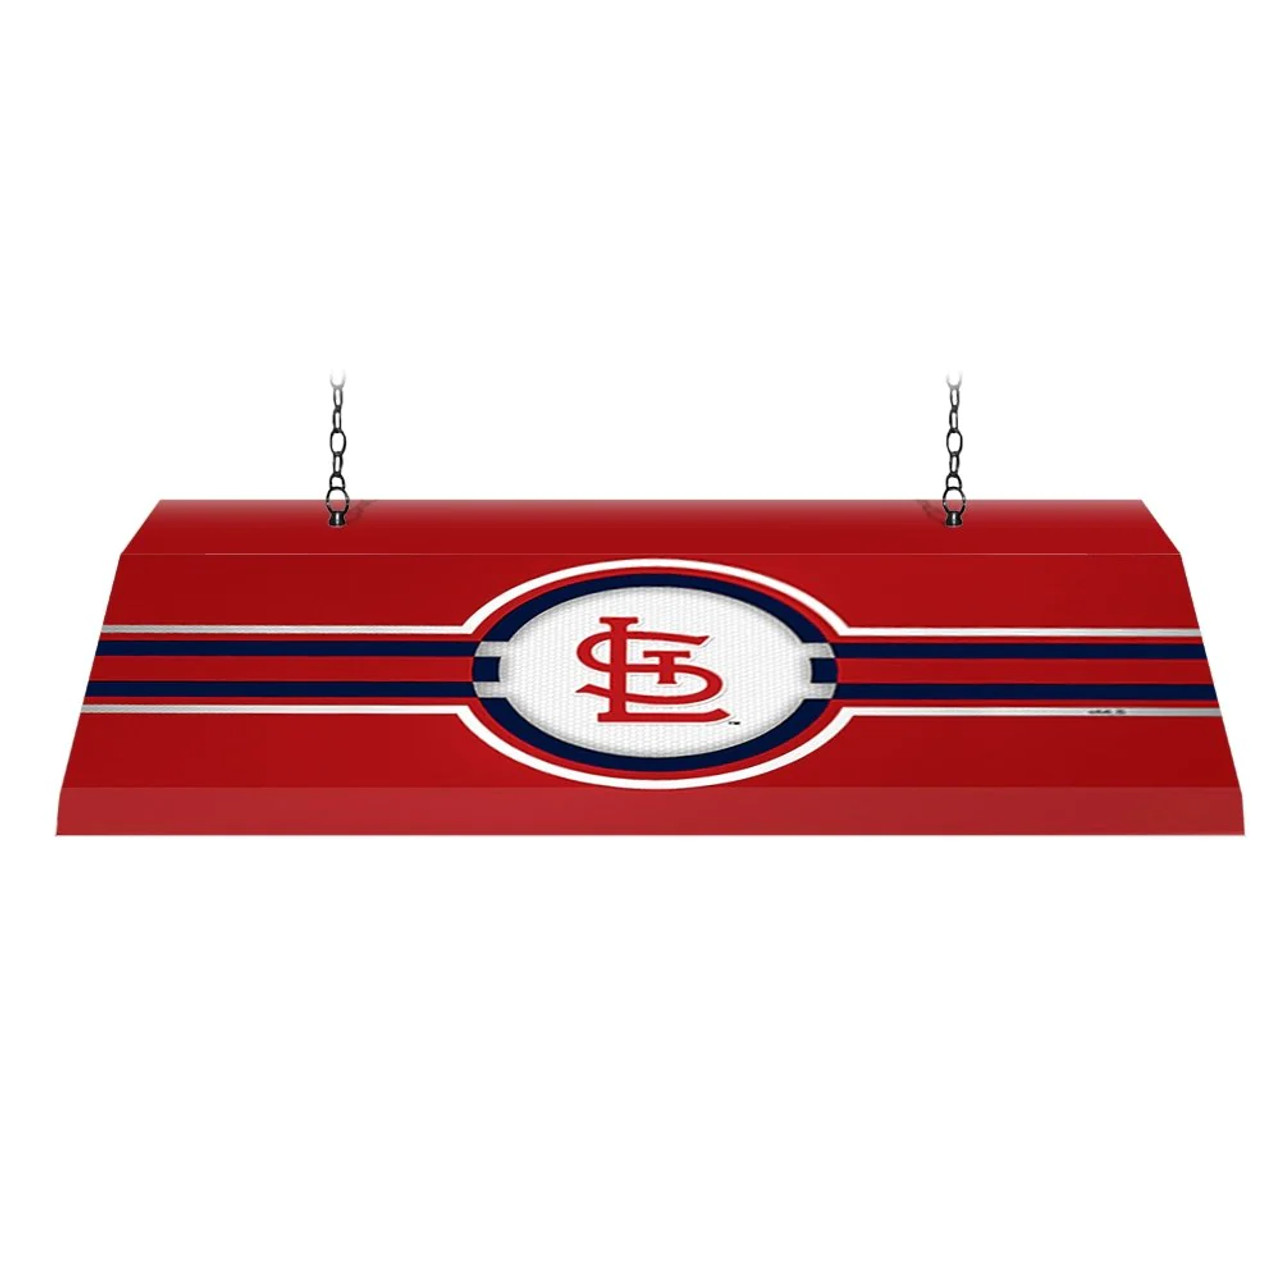 St. Louis Cardinals: Edge Glow Pool Table Light "A" Version